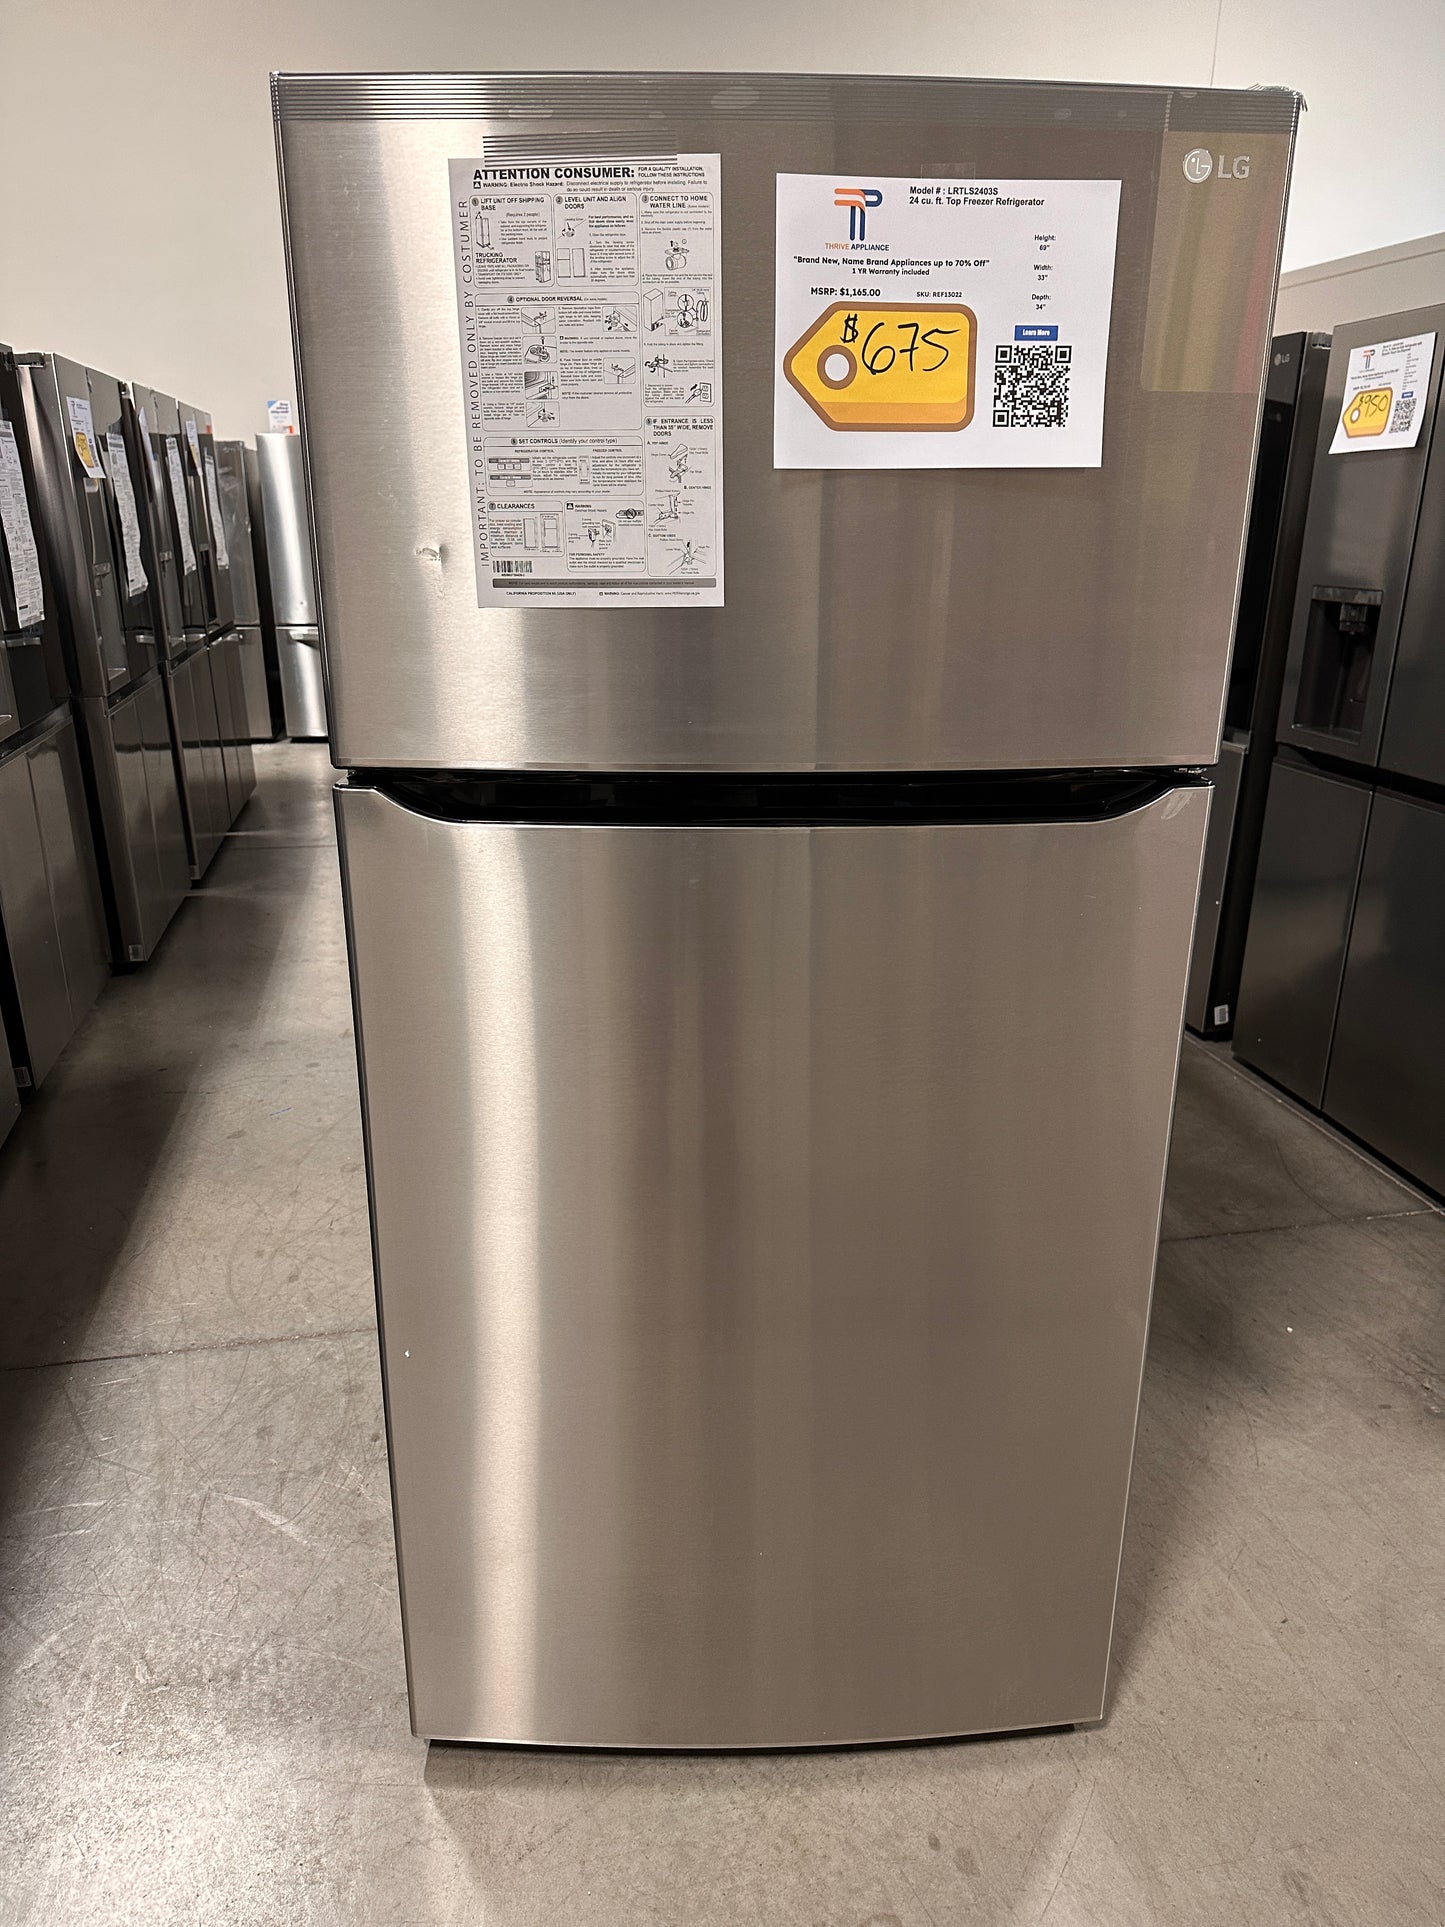 Top Mount Refrigerator with Internal Water Dispenser - Stainless Steel  MODEL: LRTLS2403S  REF13022